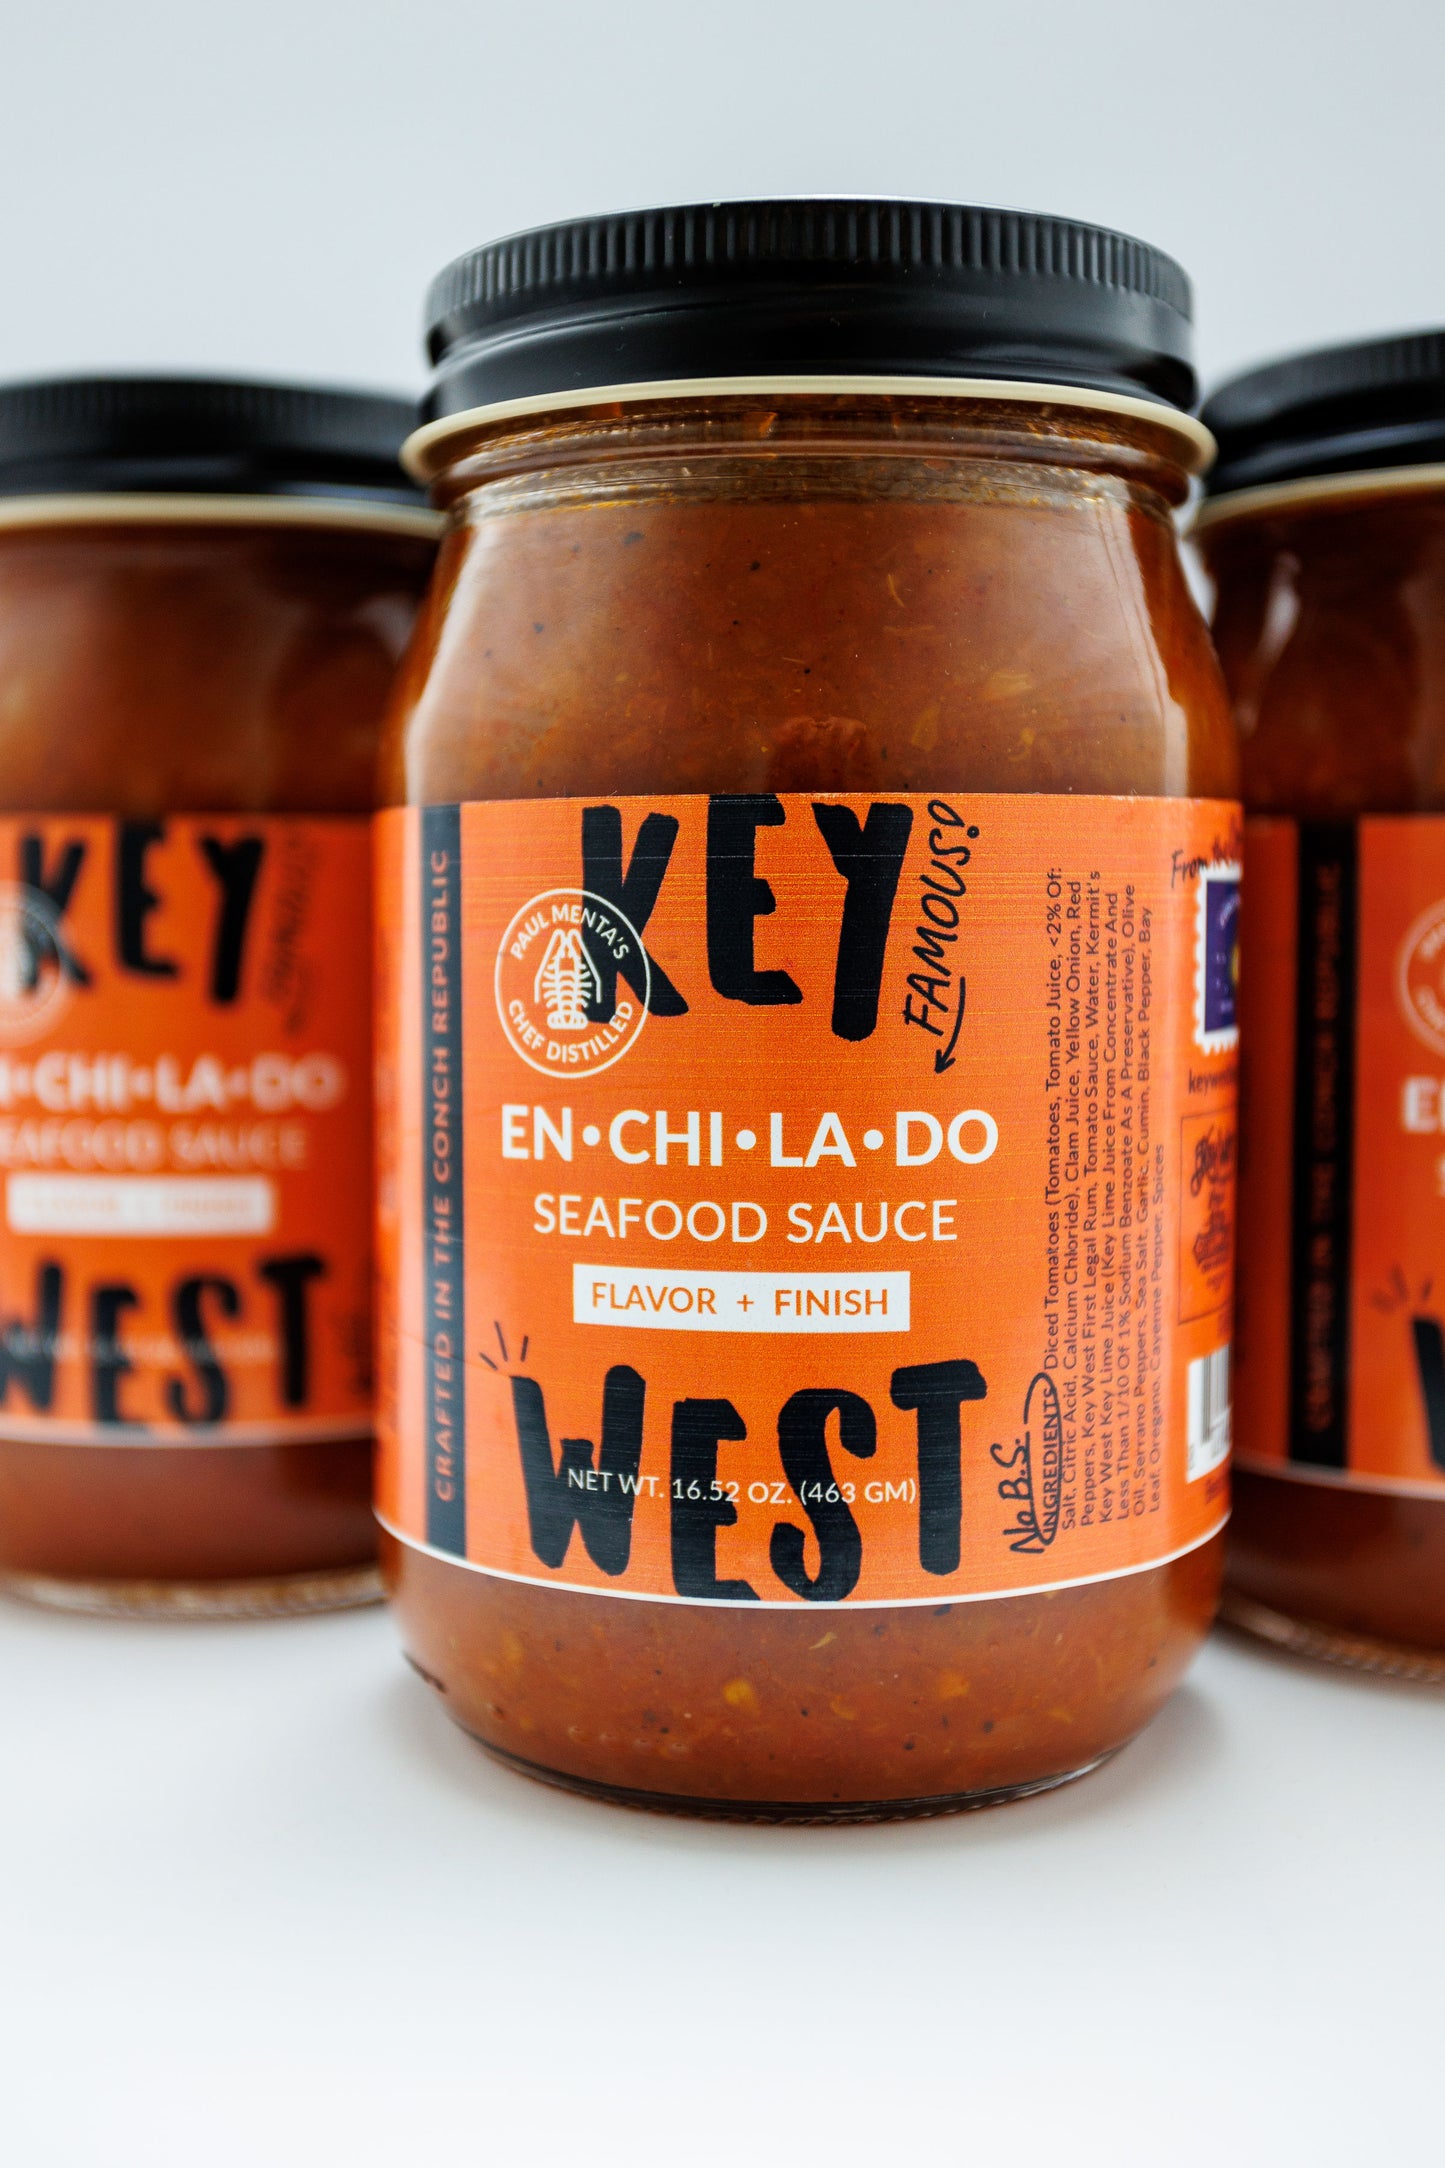 Key West Enchilado Sauce (Seafood Sauce)